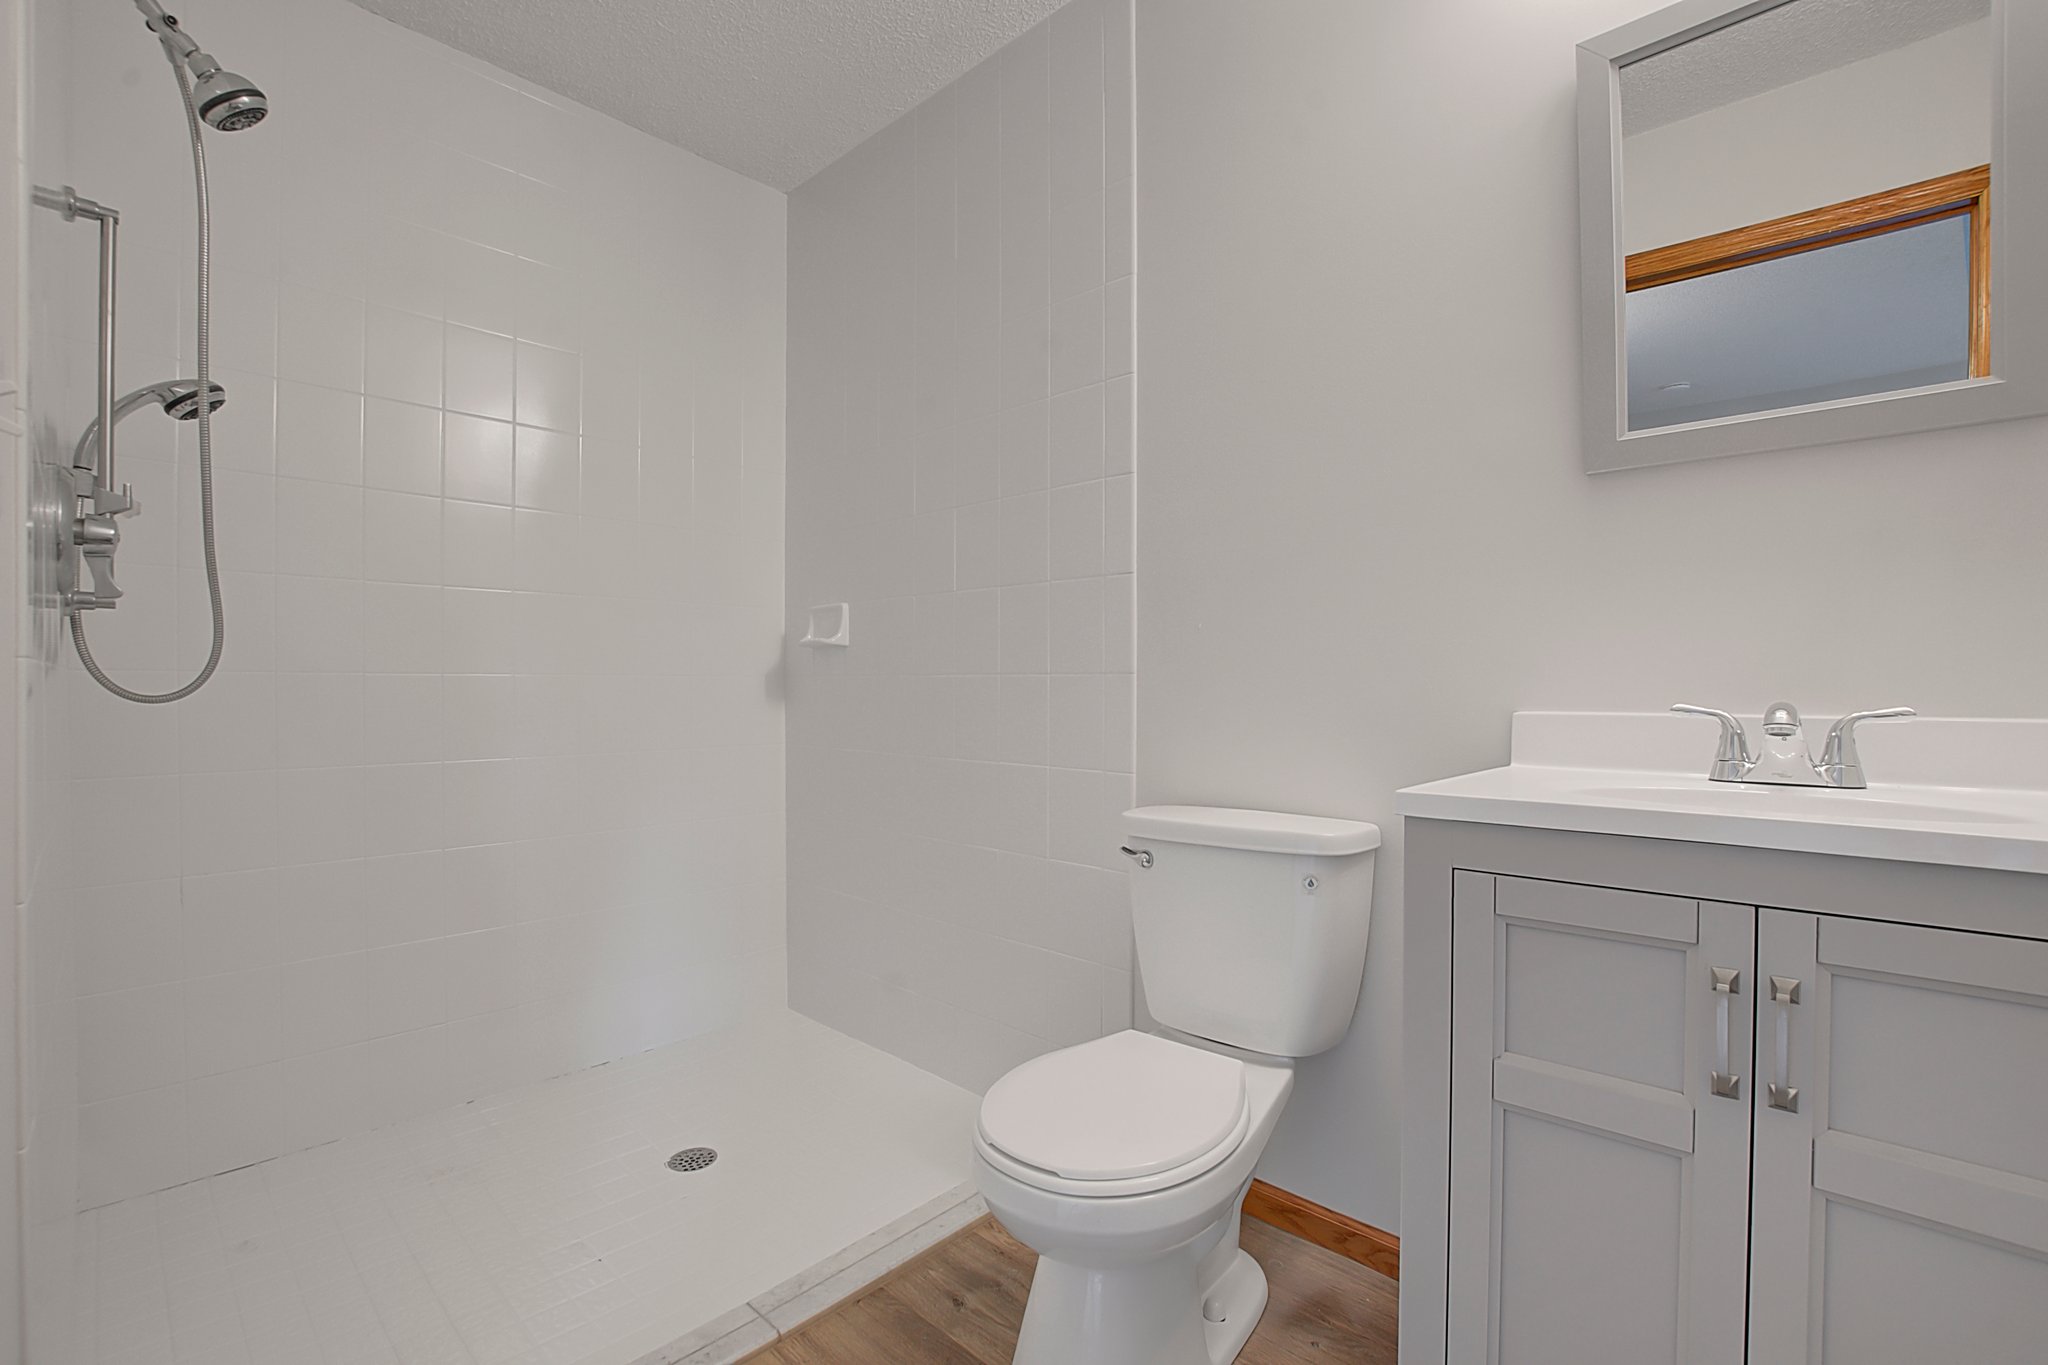 Full Home Rehab 3 - Bathroom Remodeling 3